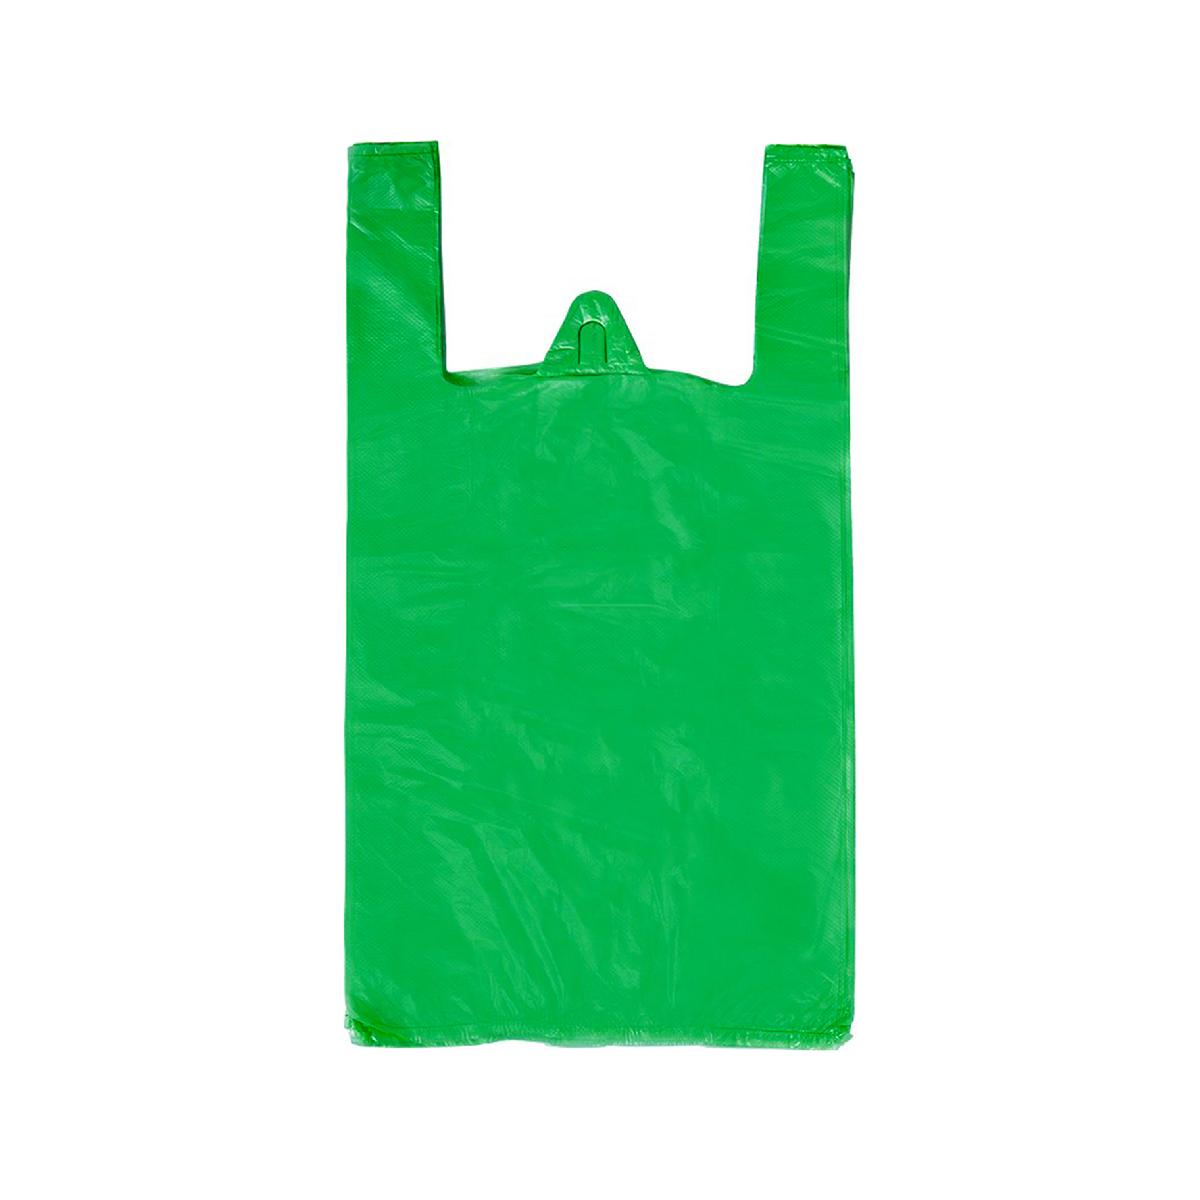 Пакет-майка без печати зеленый 24+14*44 13мкр (100/2000)